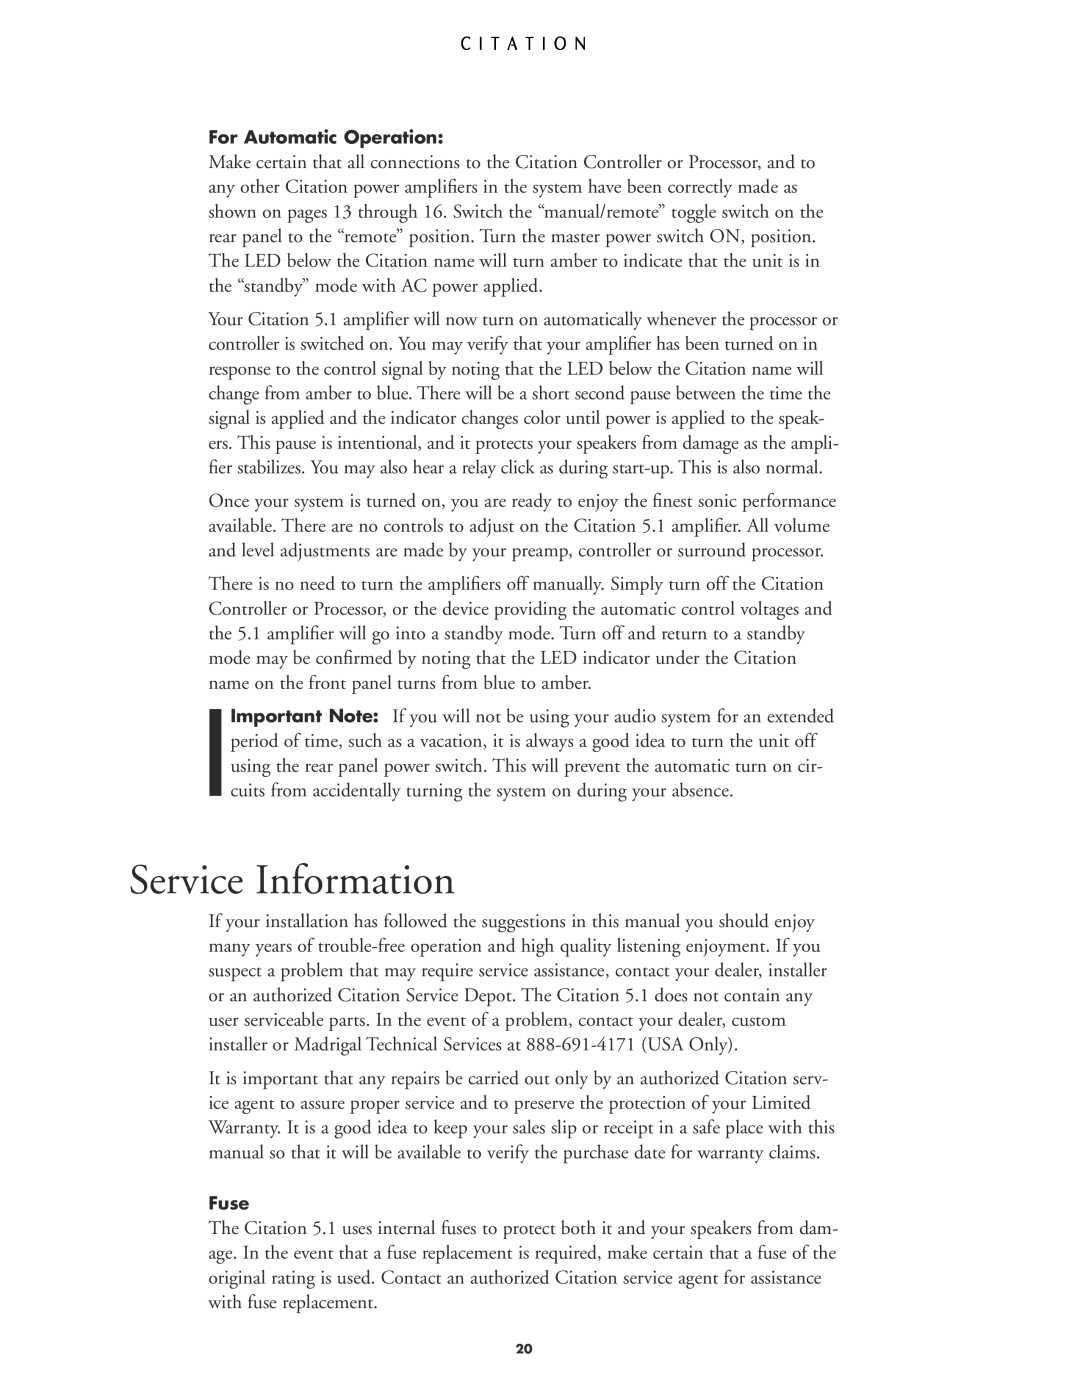 Harman-Kardon 5.1 manual Service Information, For Automatic Operation, Fuse 